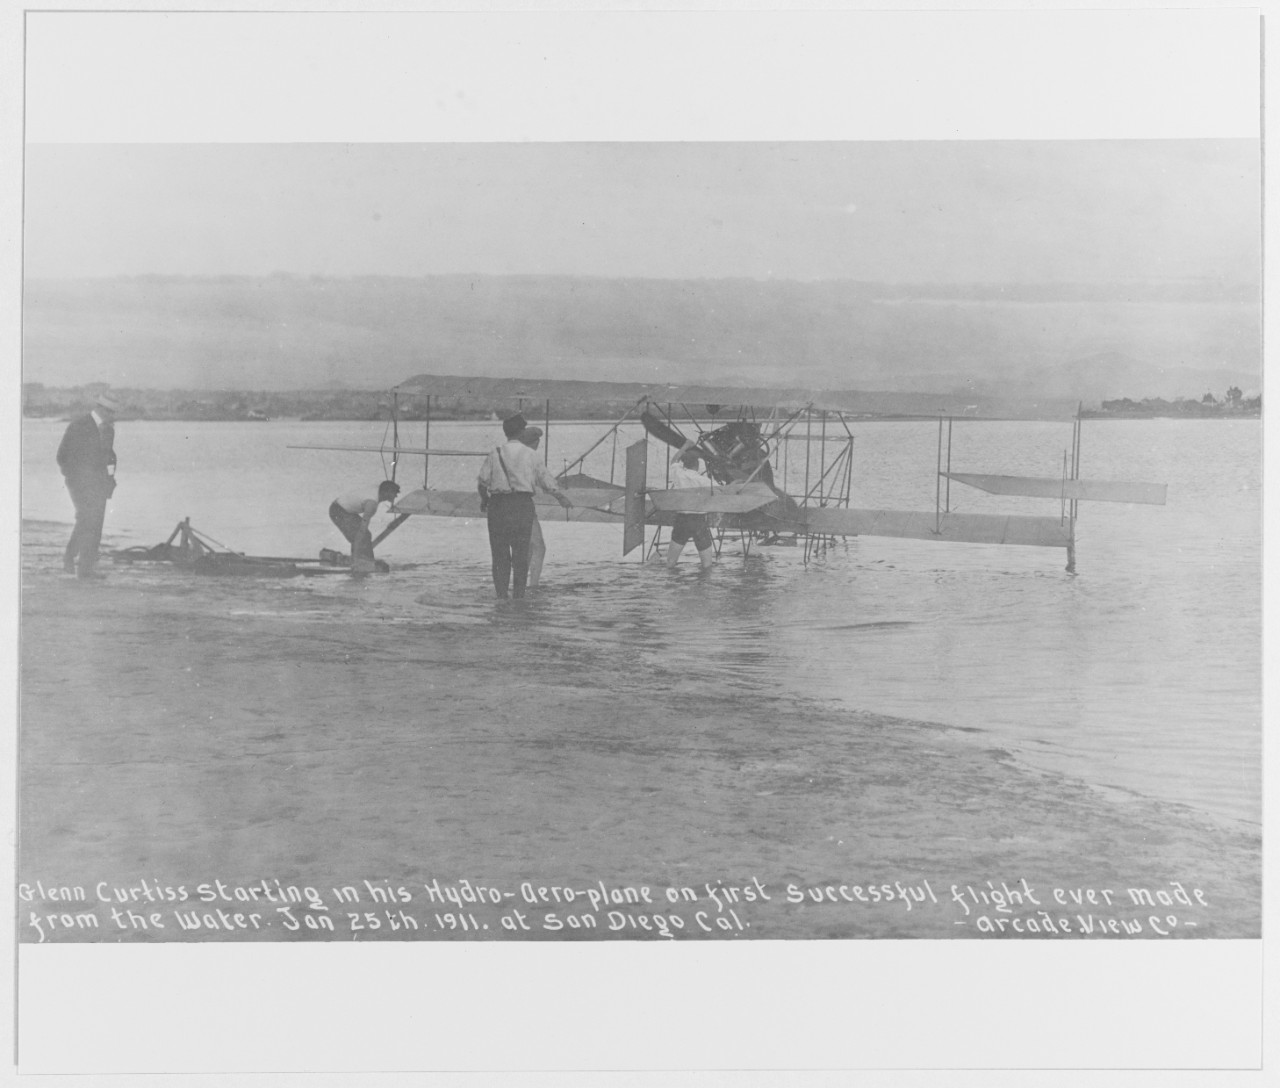 Curtiss hydroplane